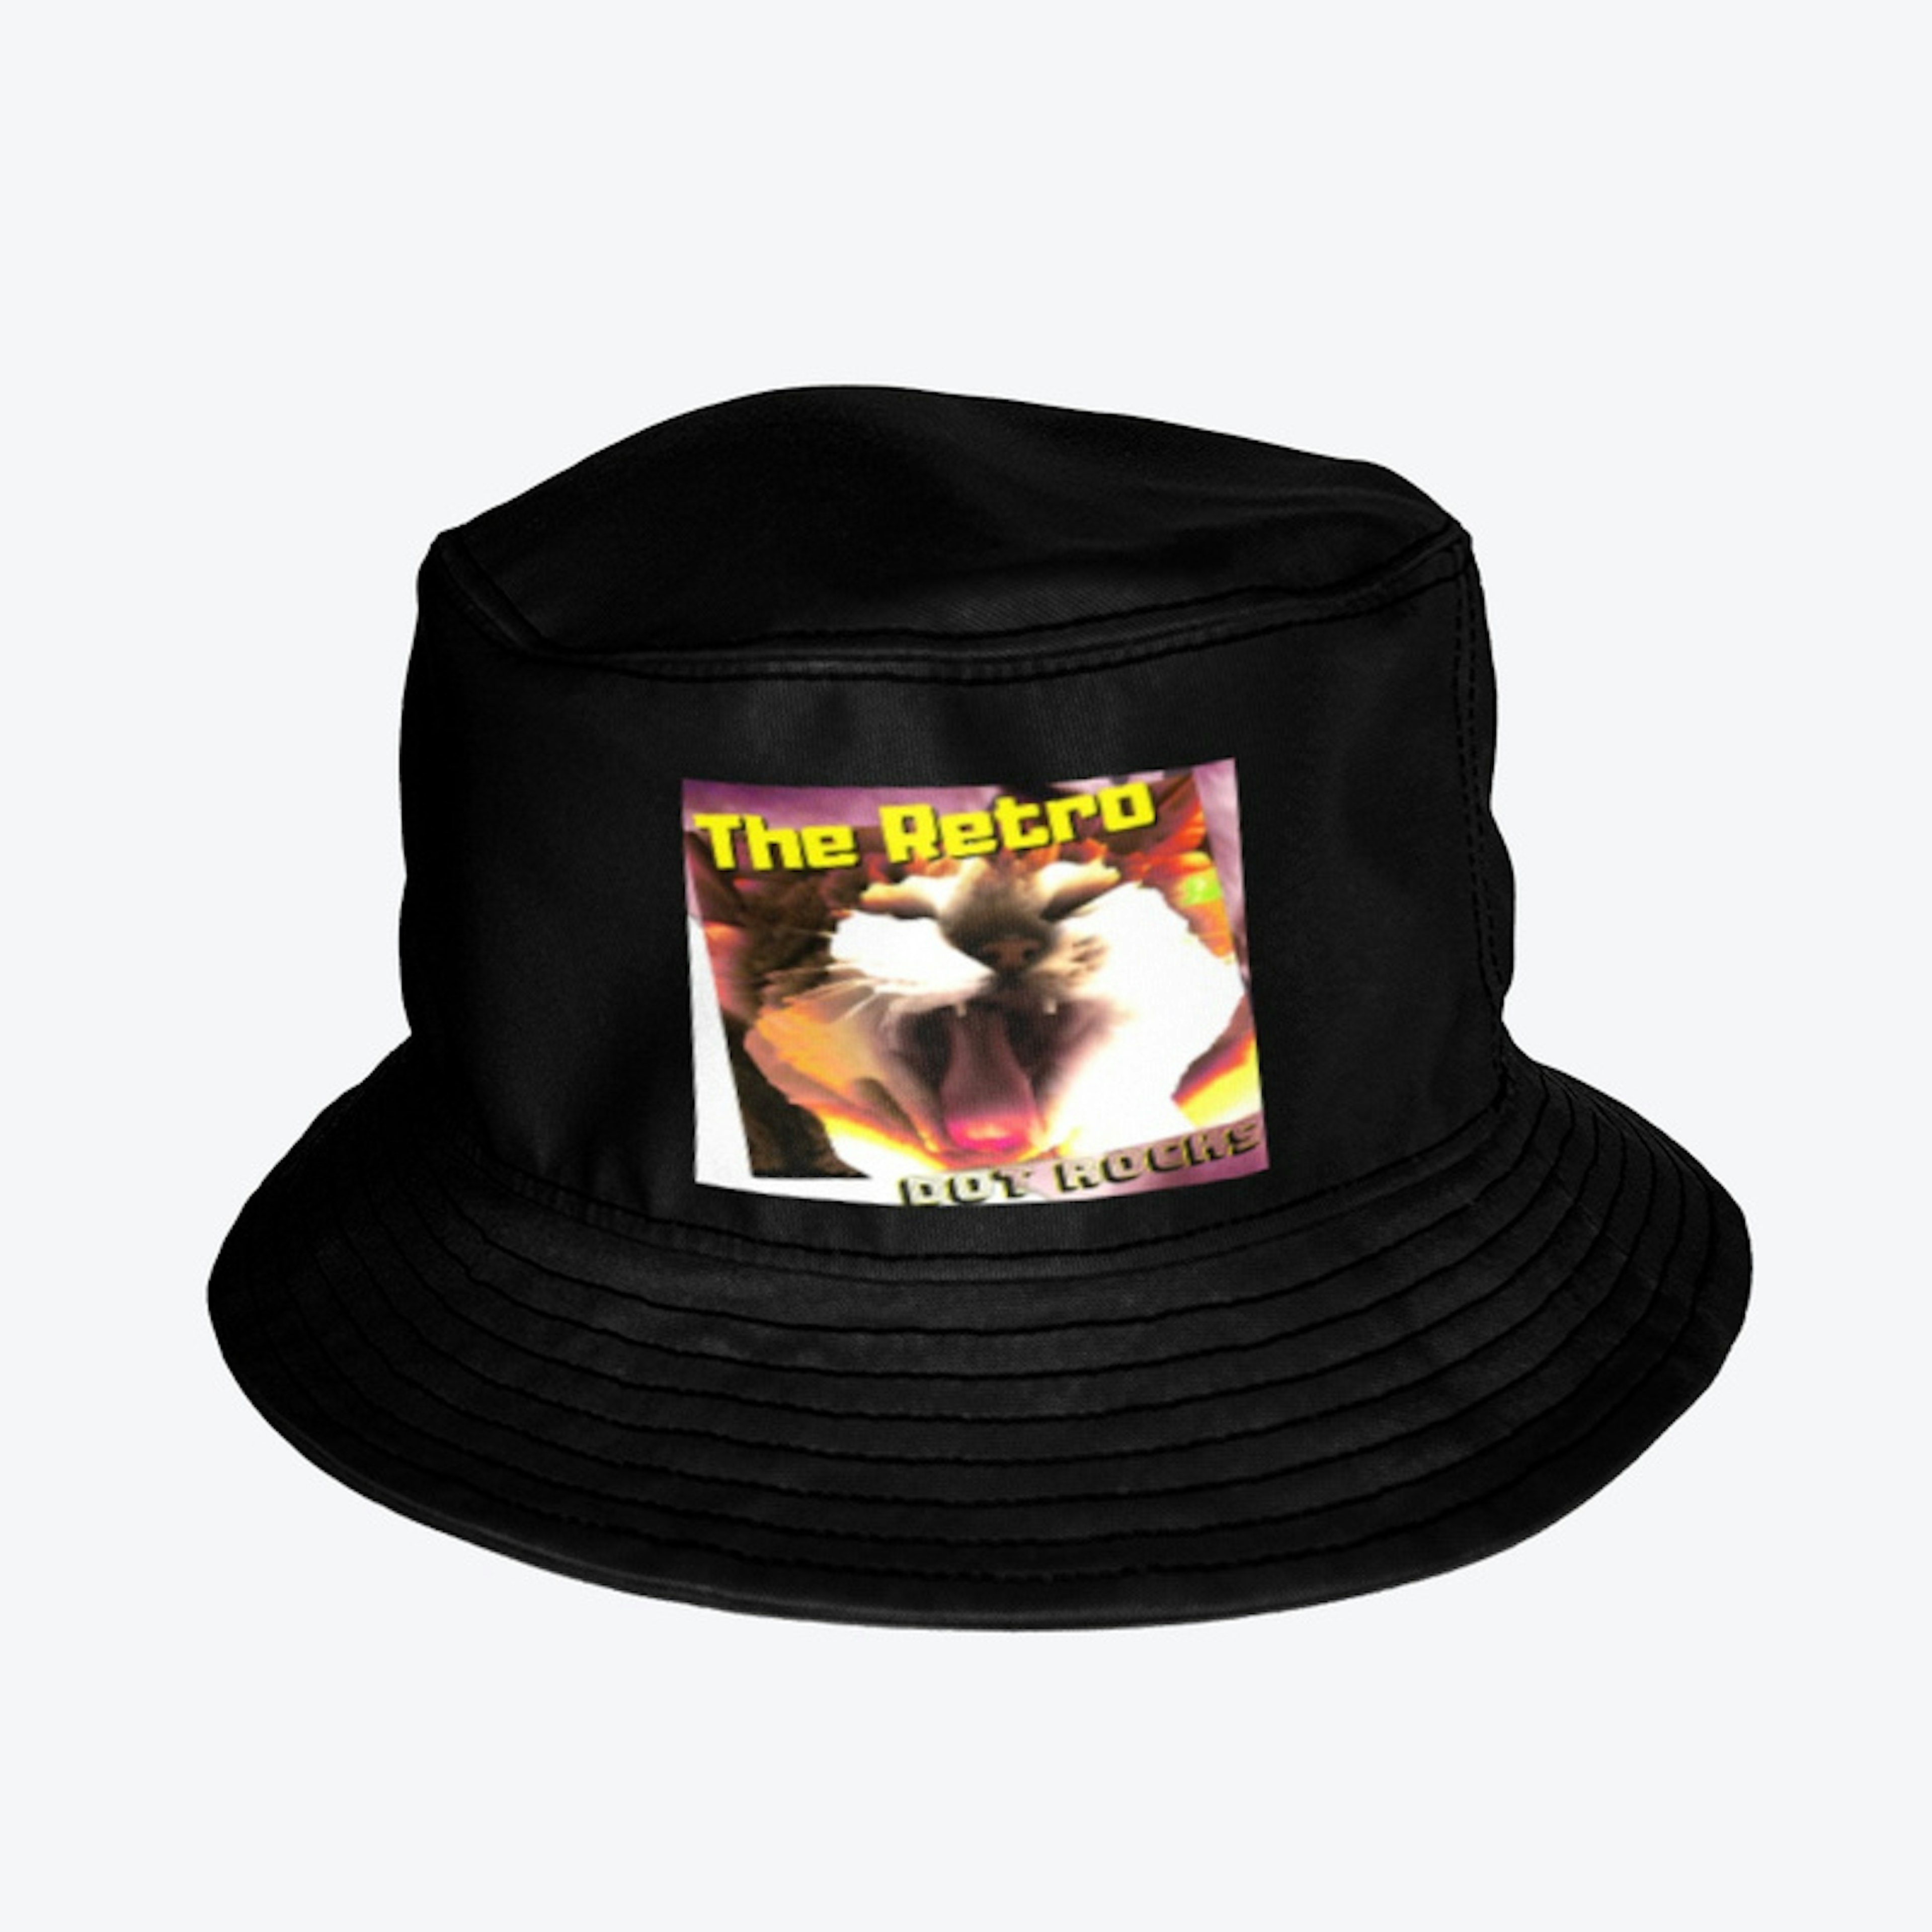 The Retro "Original Collection" Hat